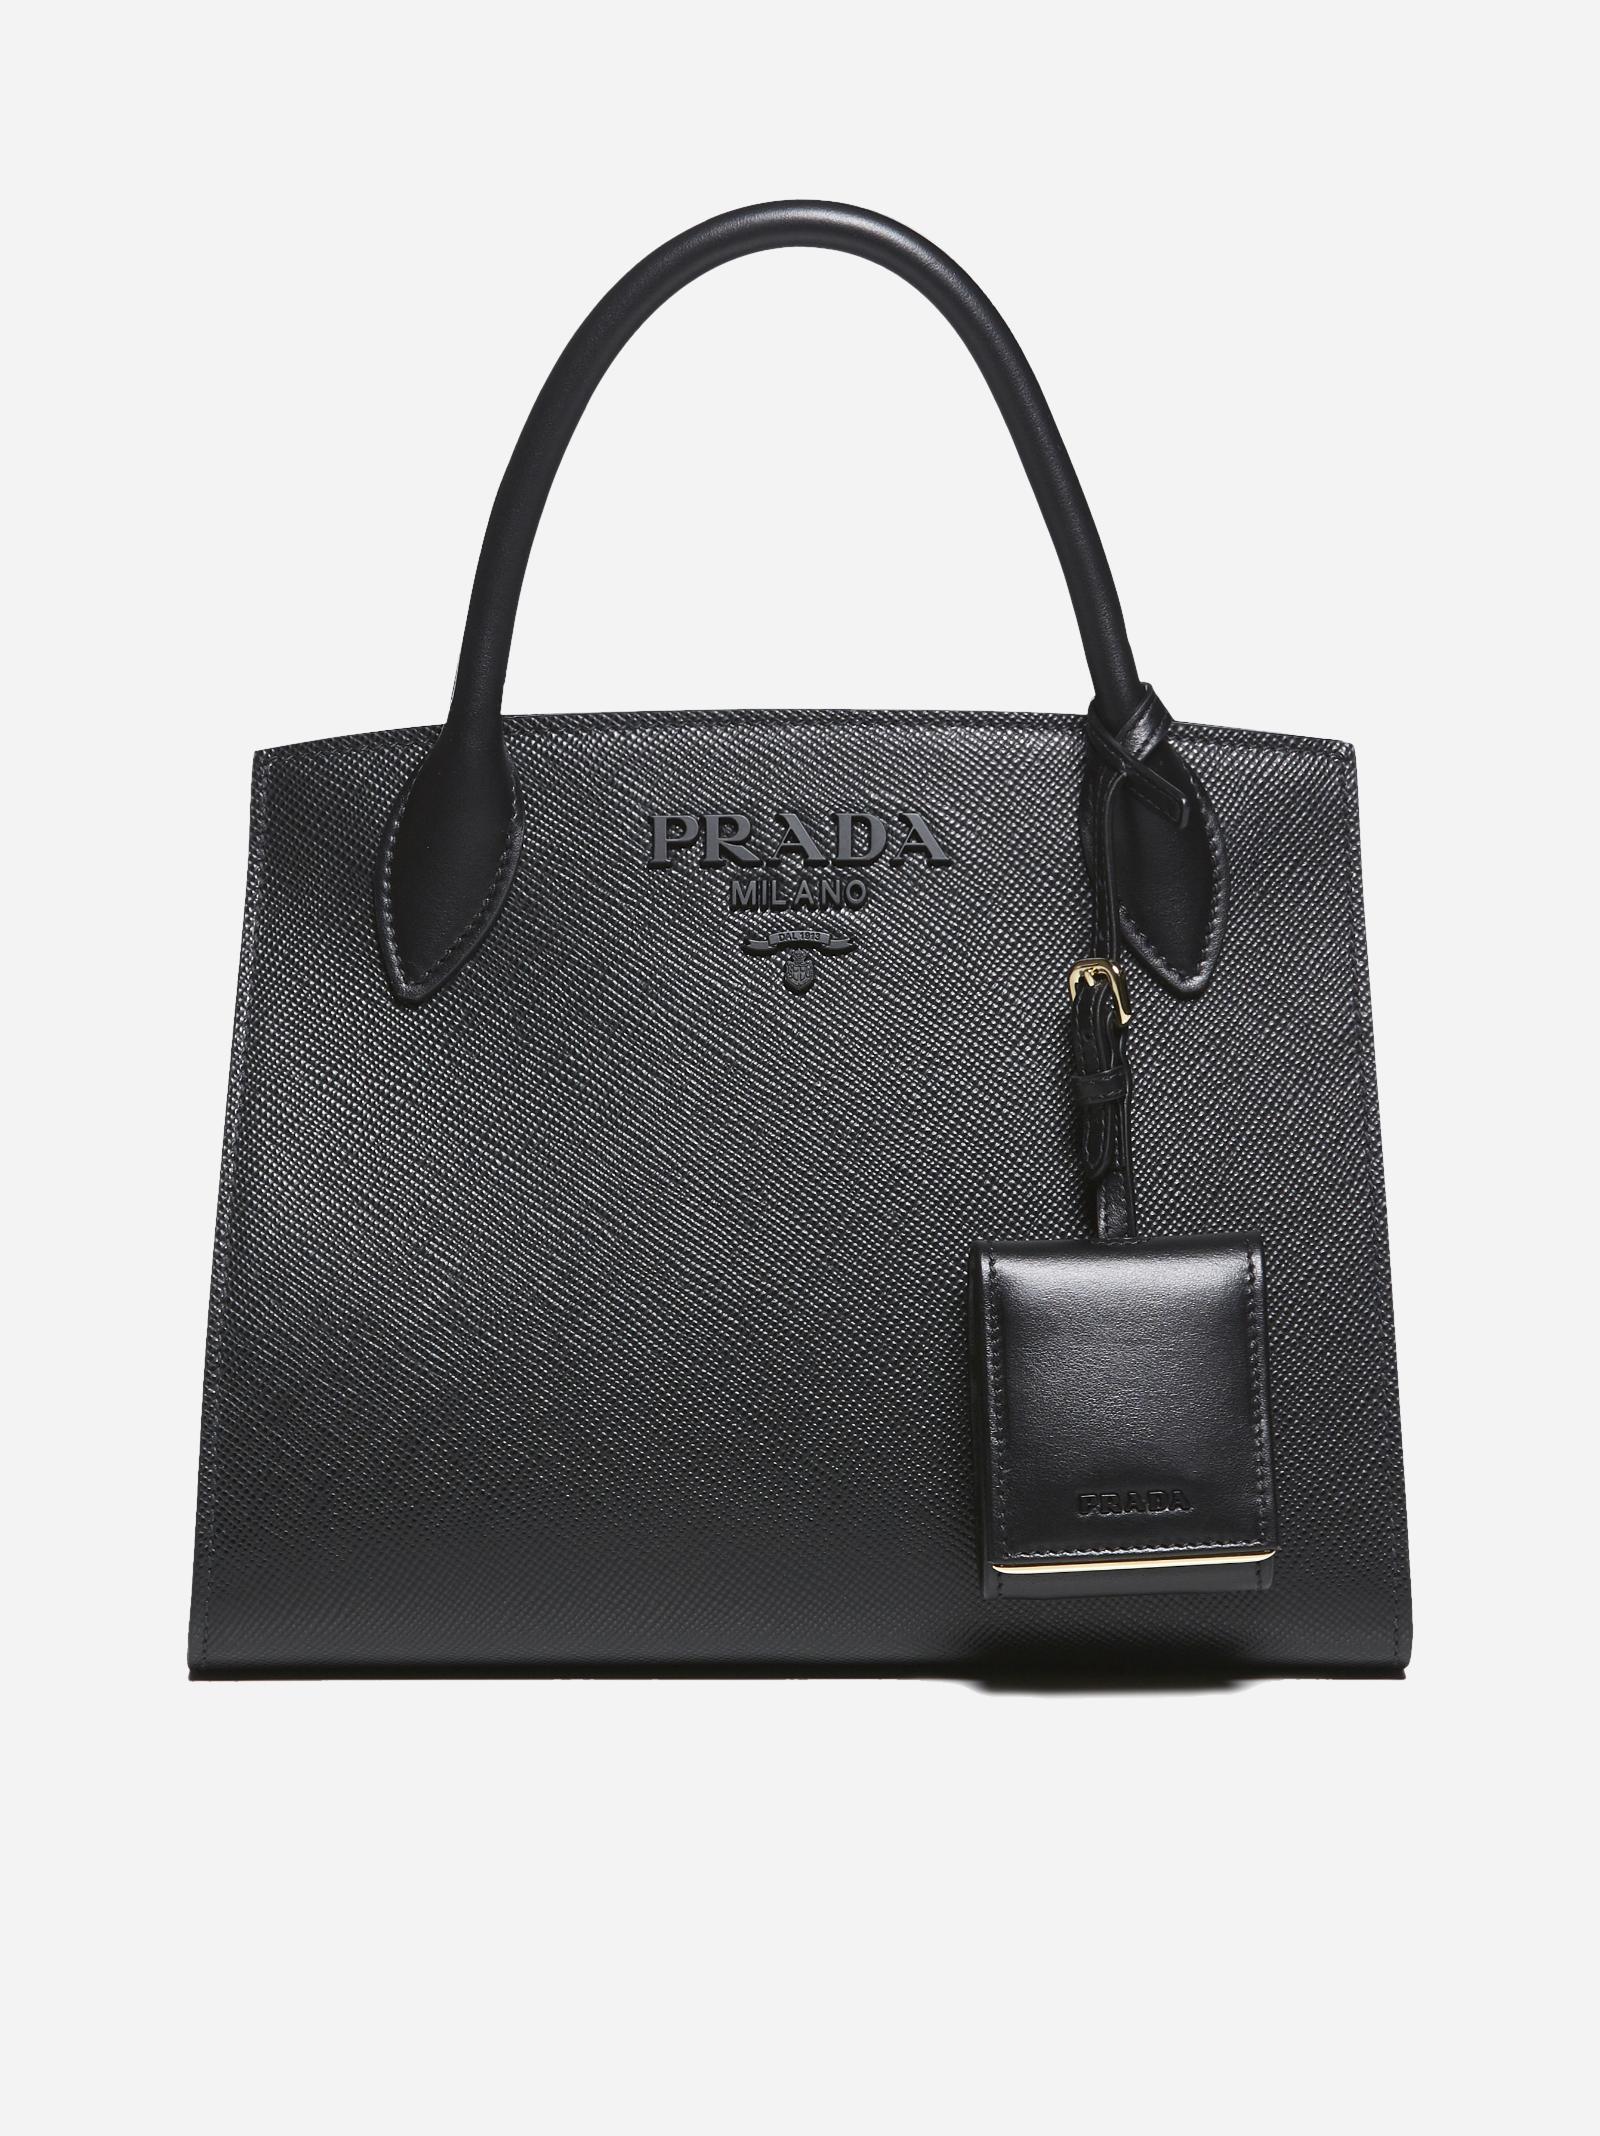 Prada Monochrome Saffiano Leather Bag in Black | Lyst